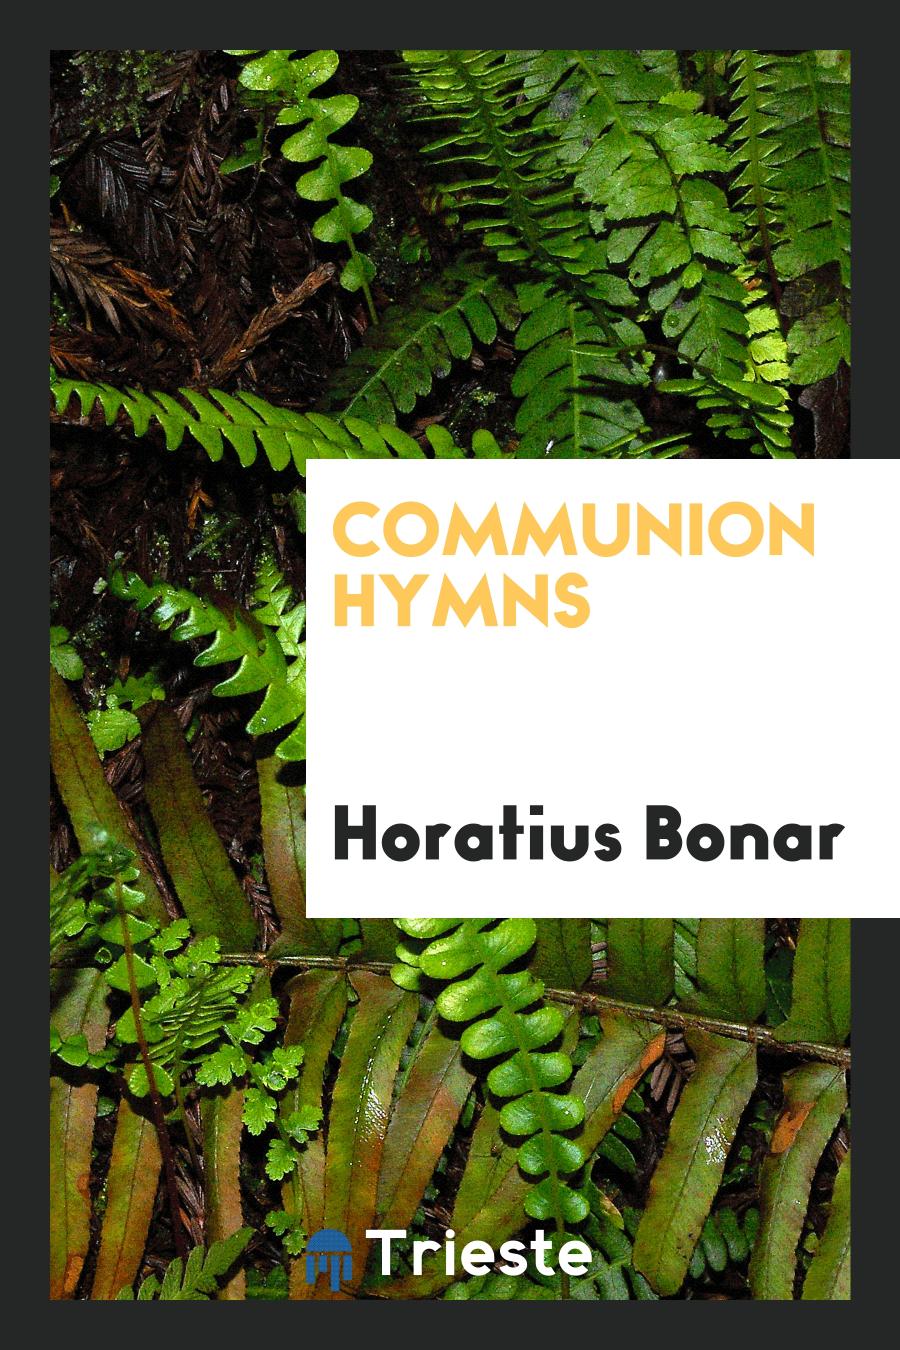 Communion hymns